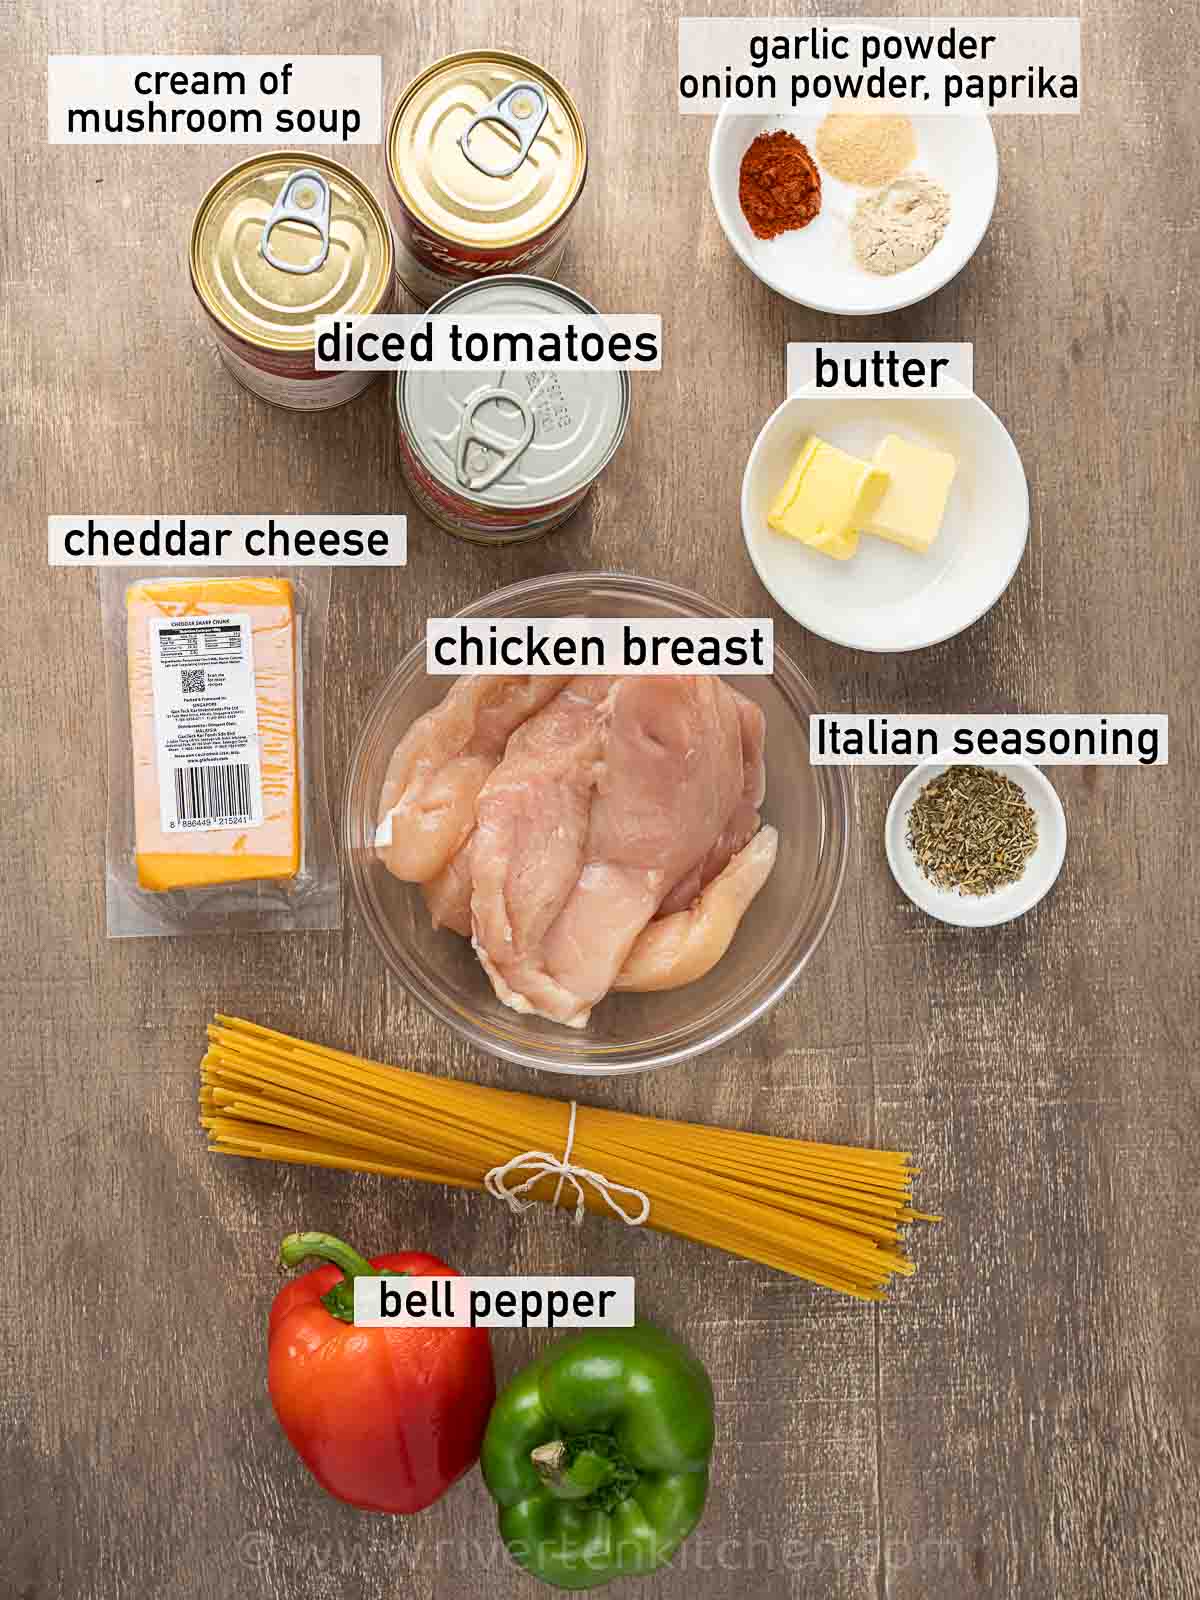 chicken breast, bell peppers, mushroom soup, cheddar cheese, garlic powder, onion powder, Italian seasoning, diced tomatoes, and spaghetti pasta.